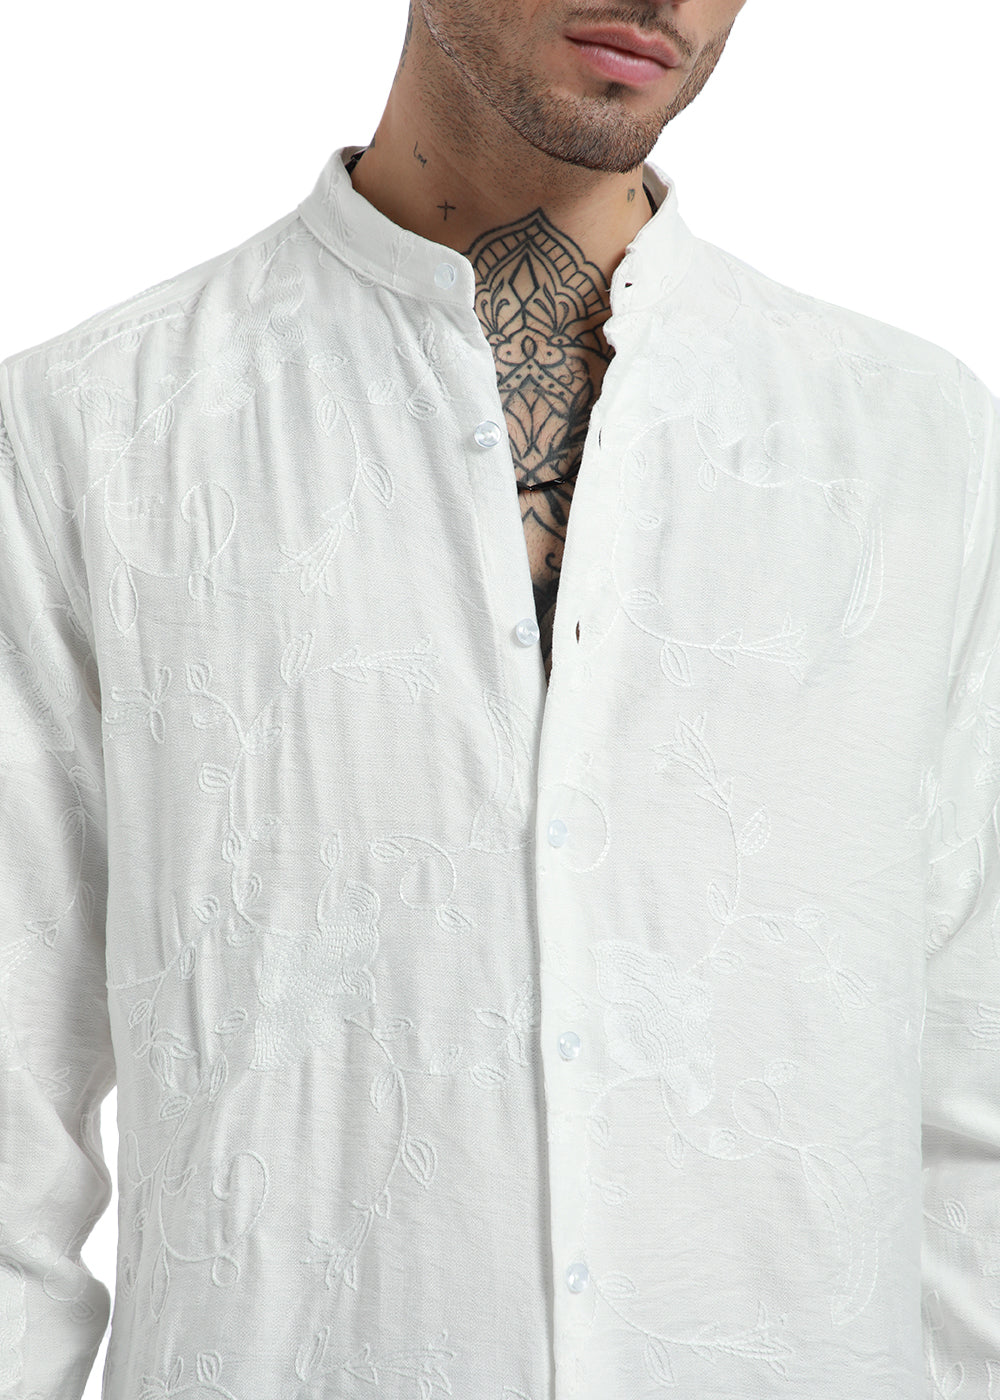 White Onyx Embroidery Shirt